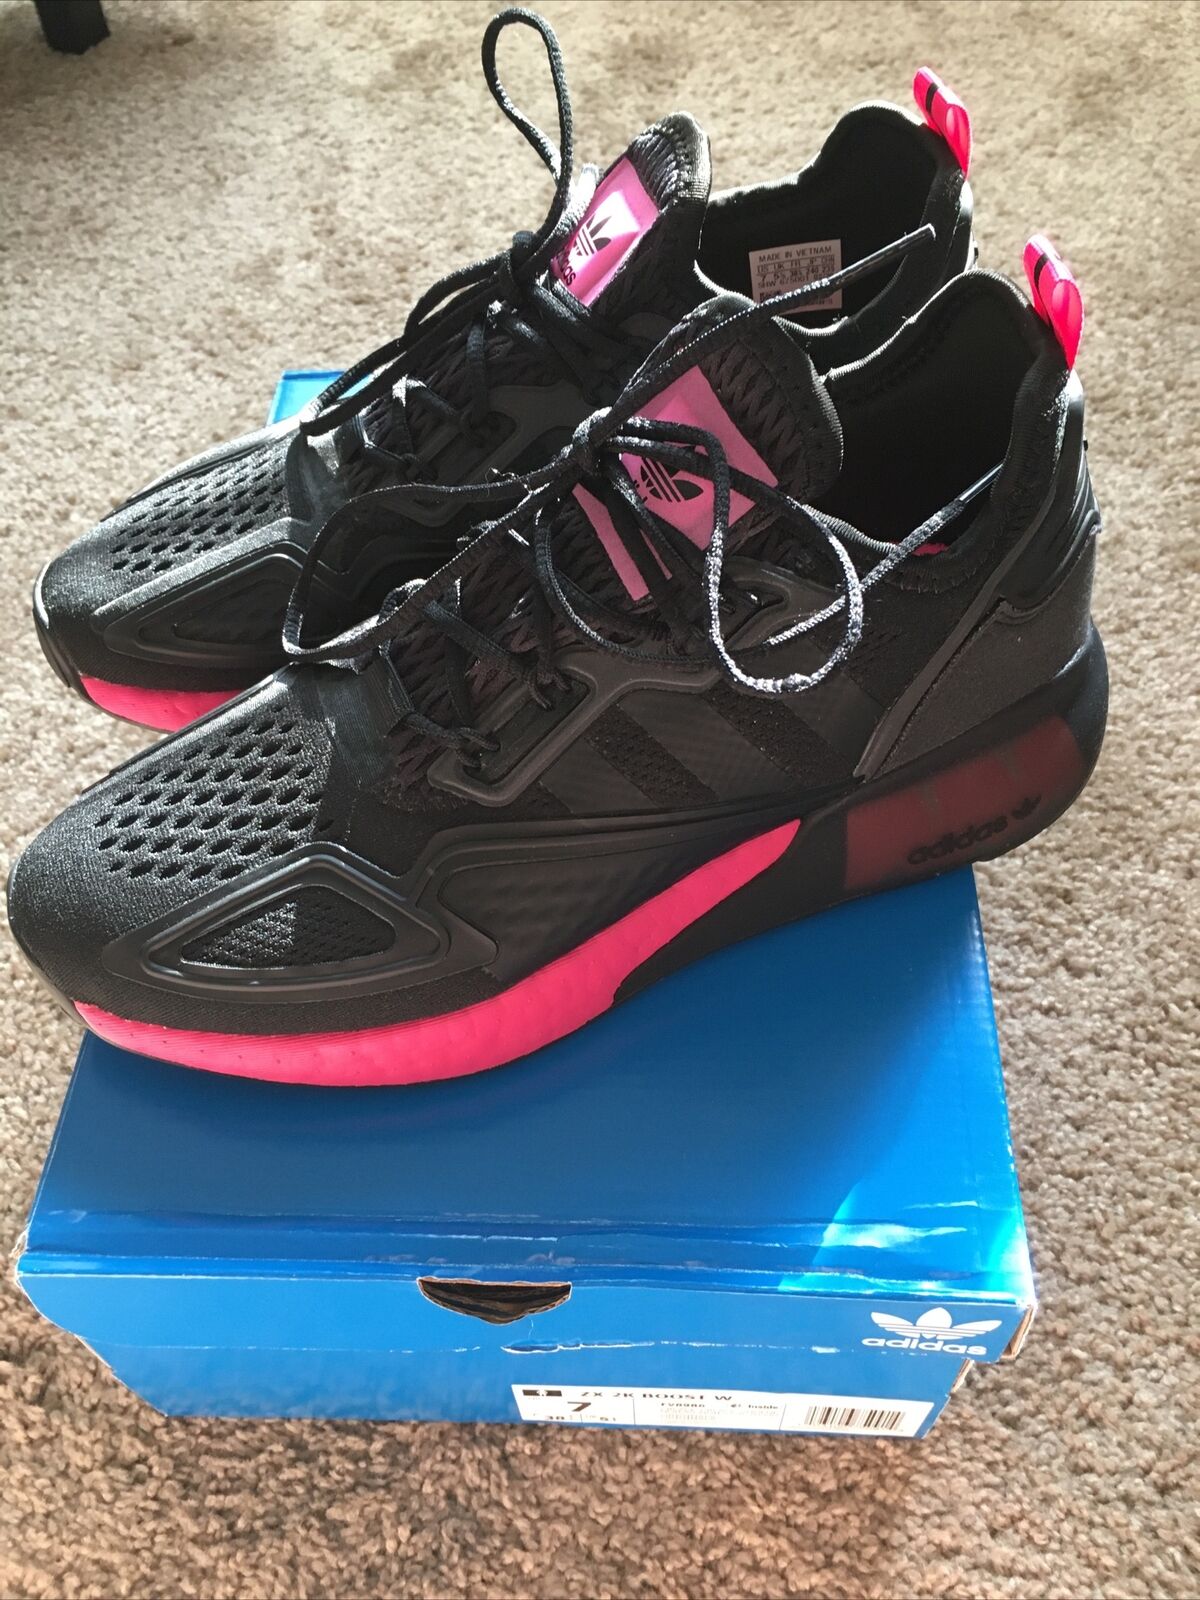 New Adidas ZX 2K Boost W Shoes Sneakers Women’s 7 Black Shock Pink